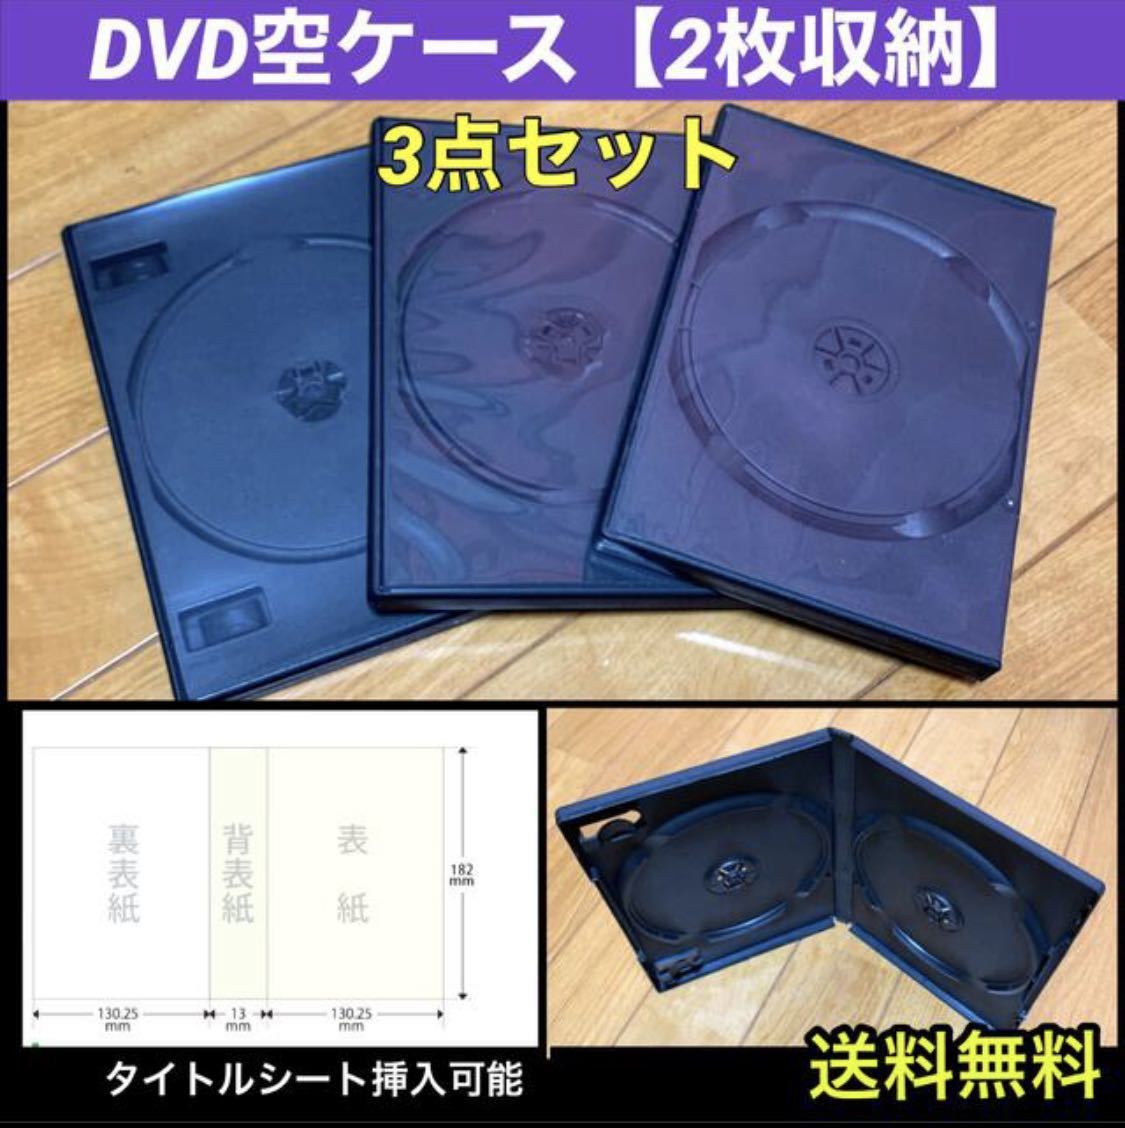 『DVDトールケース・空／黒／④枚セット』(1枚収納タイプ)』